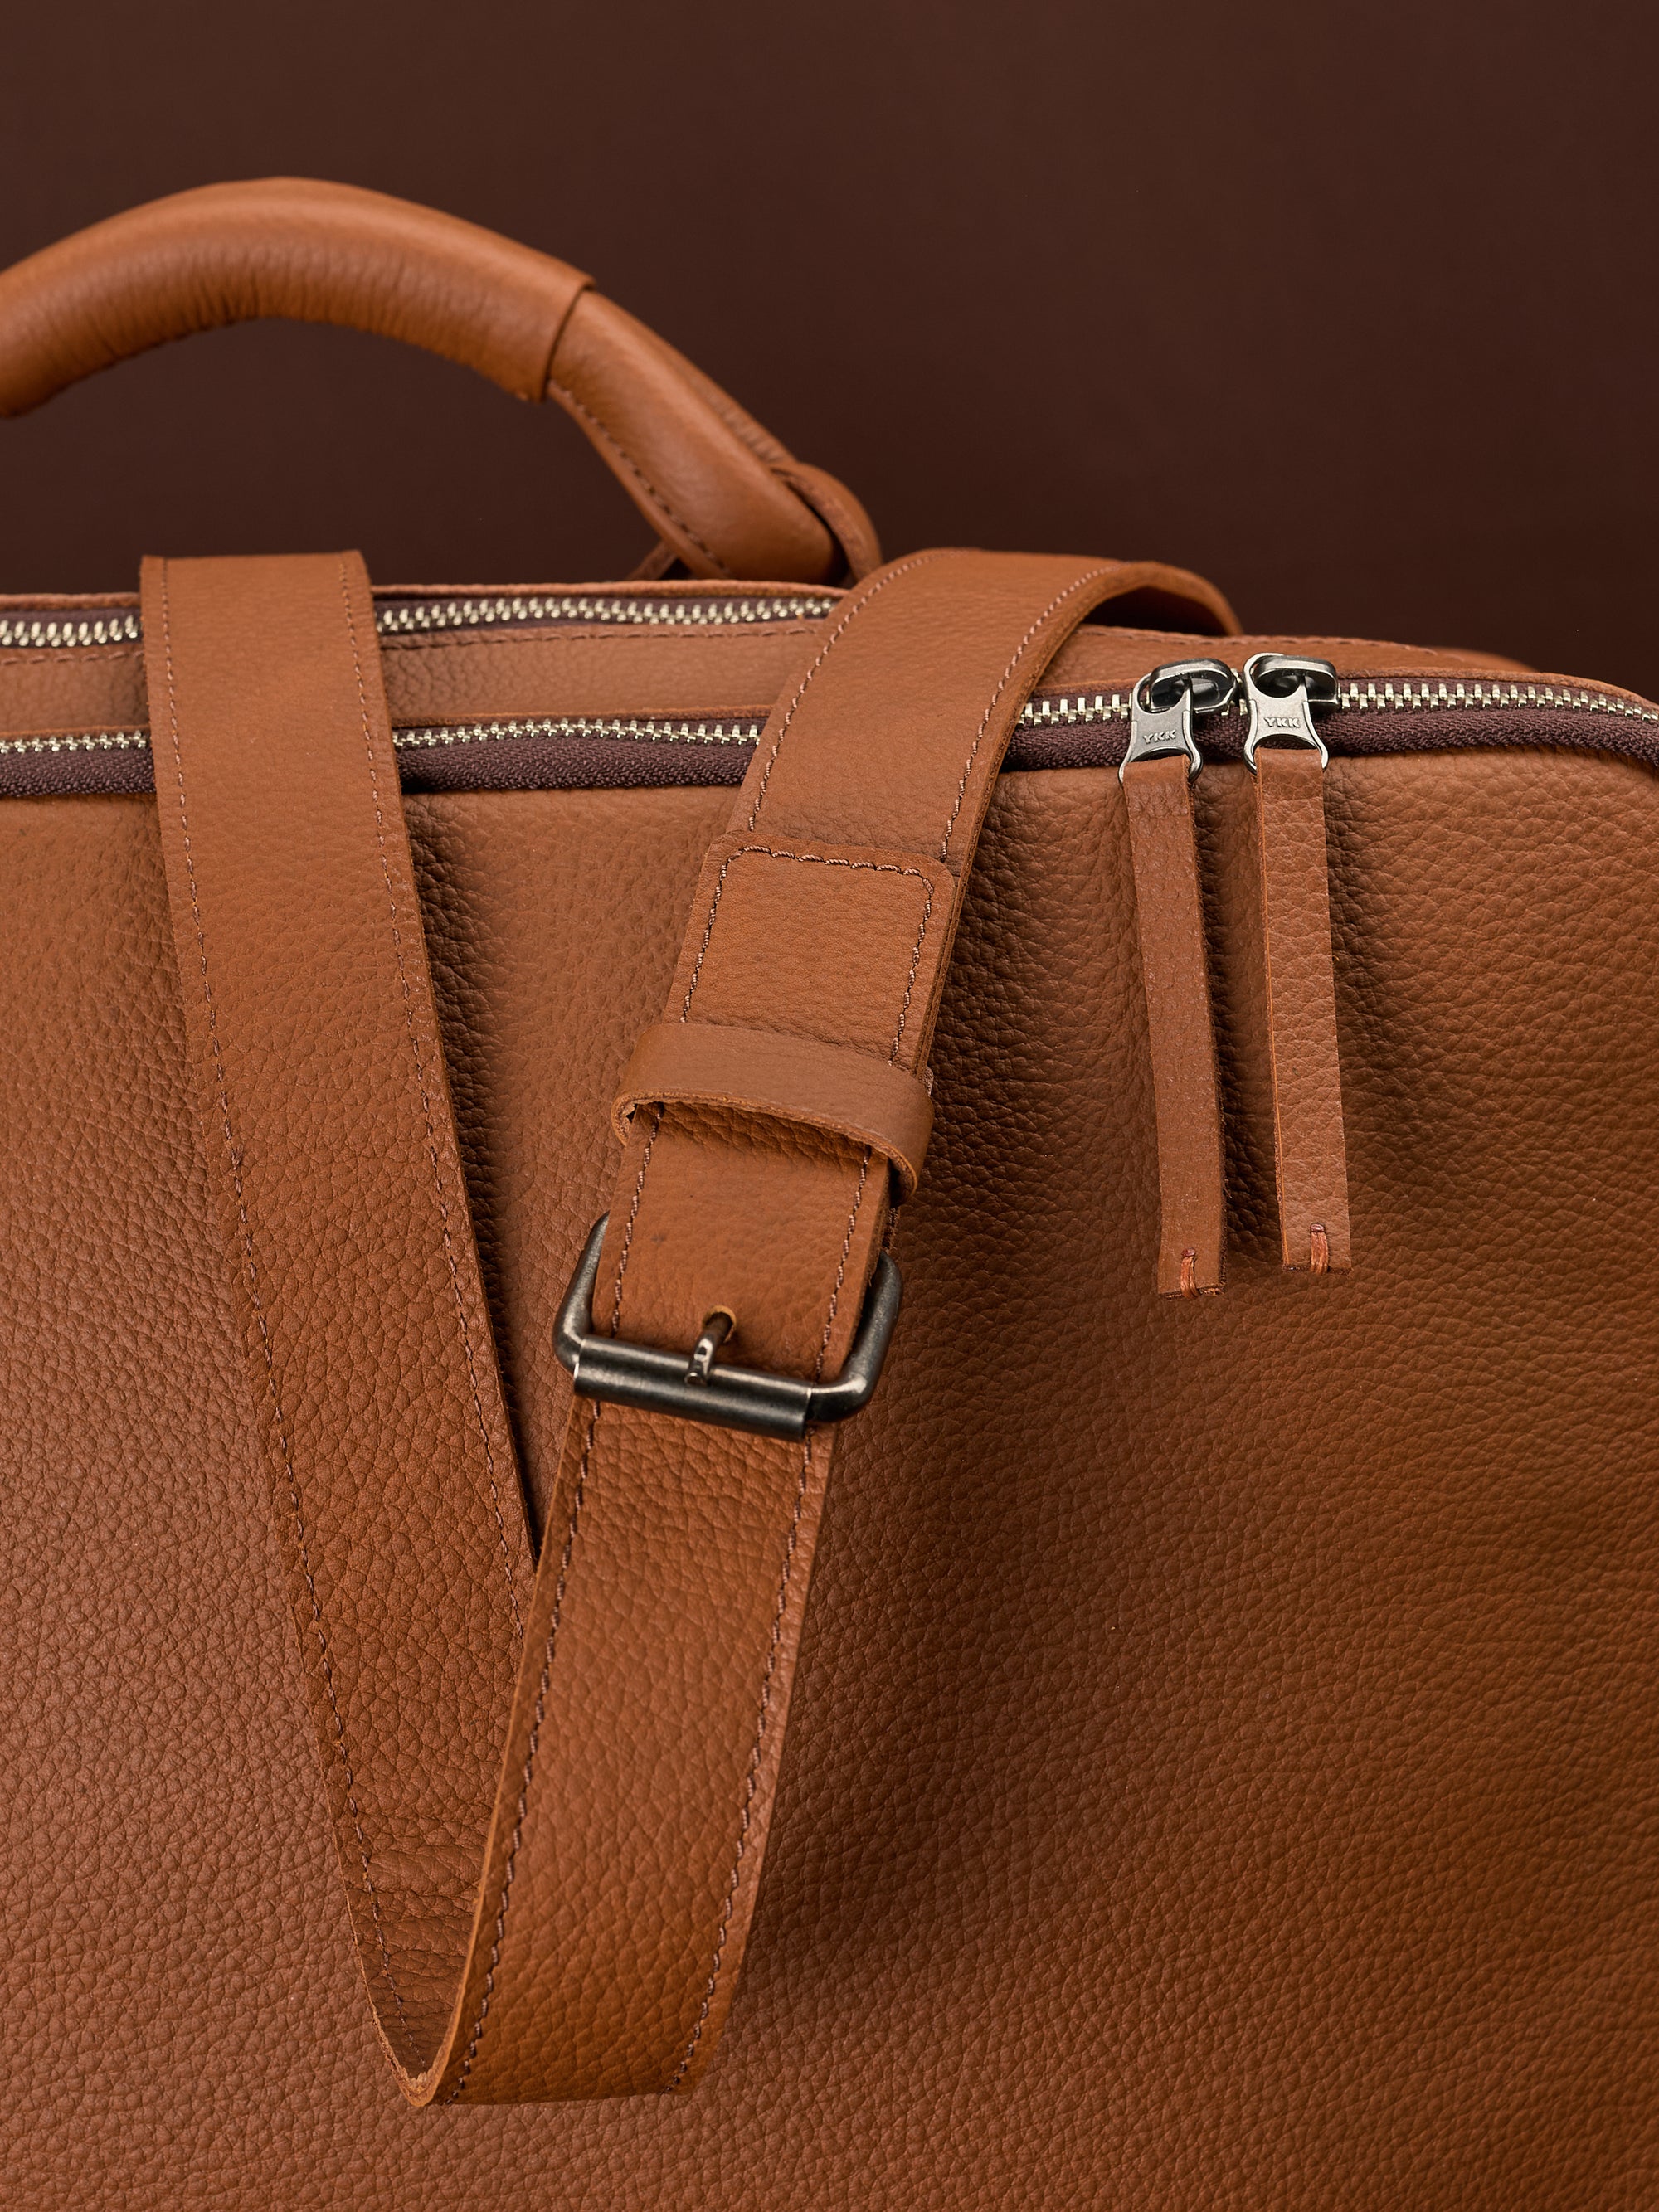 Shoulder Strap. Mens Weekender Bag Tan by Capra Leather